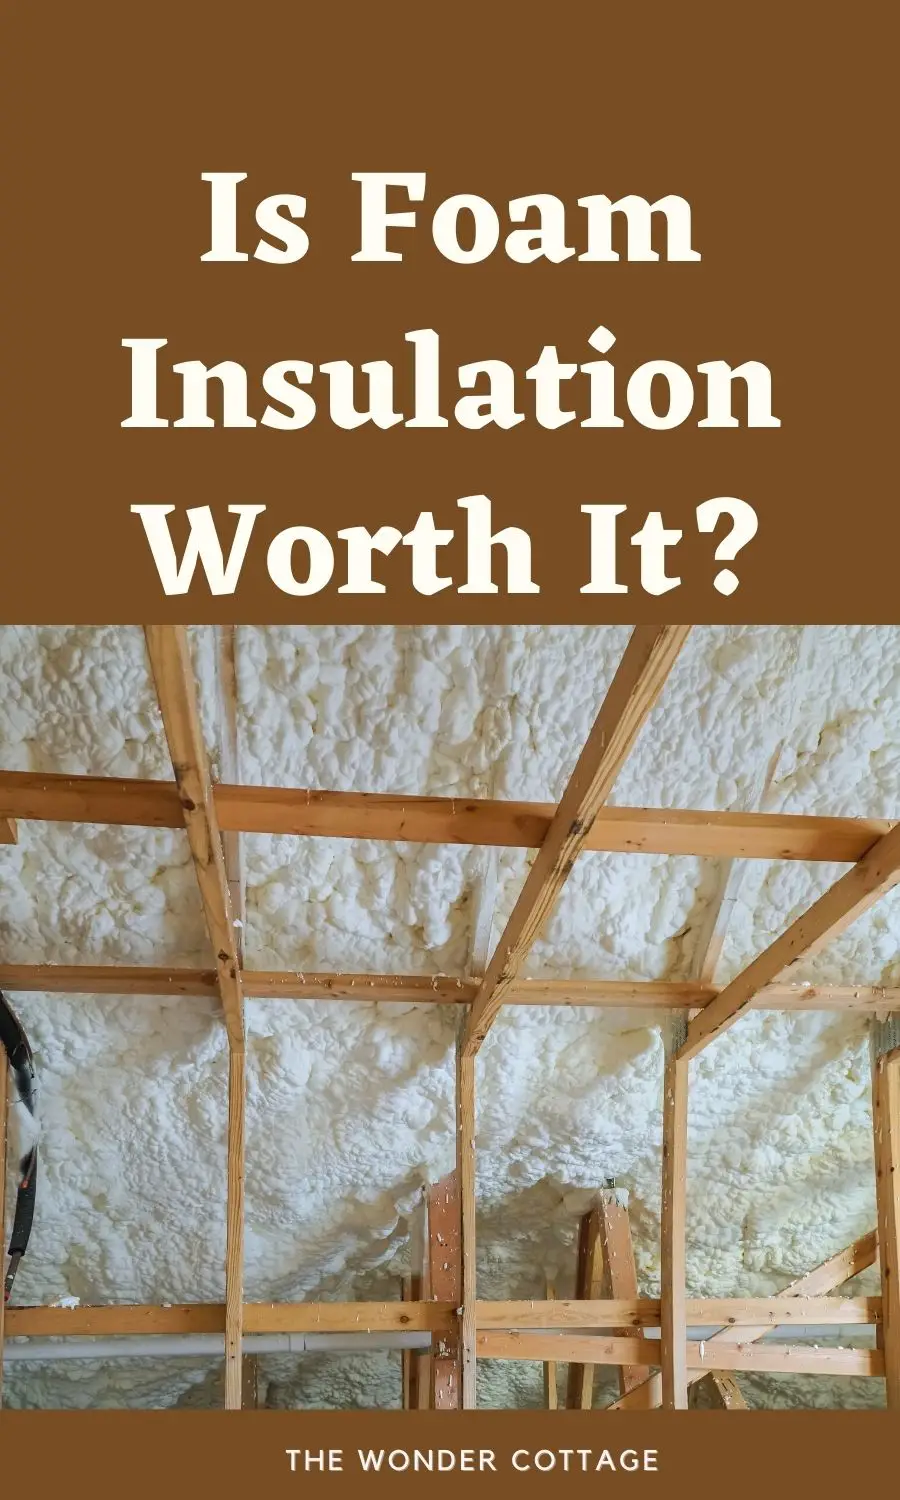 Is Foam Insulation Worth It?